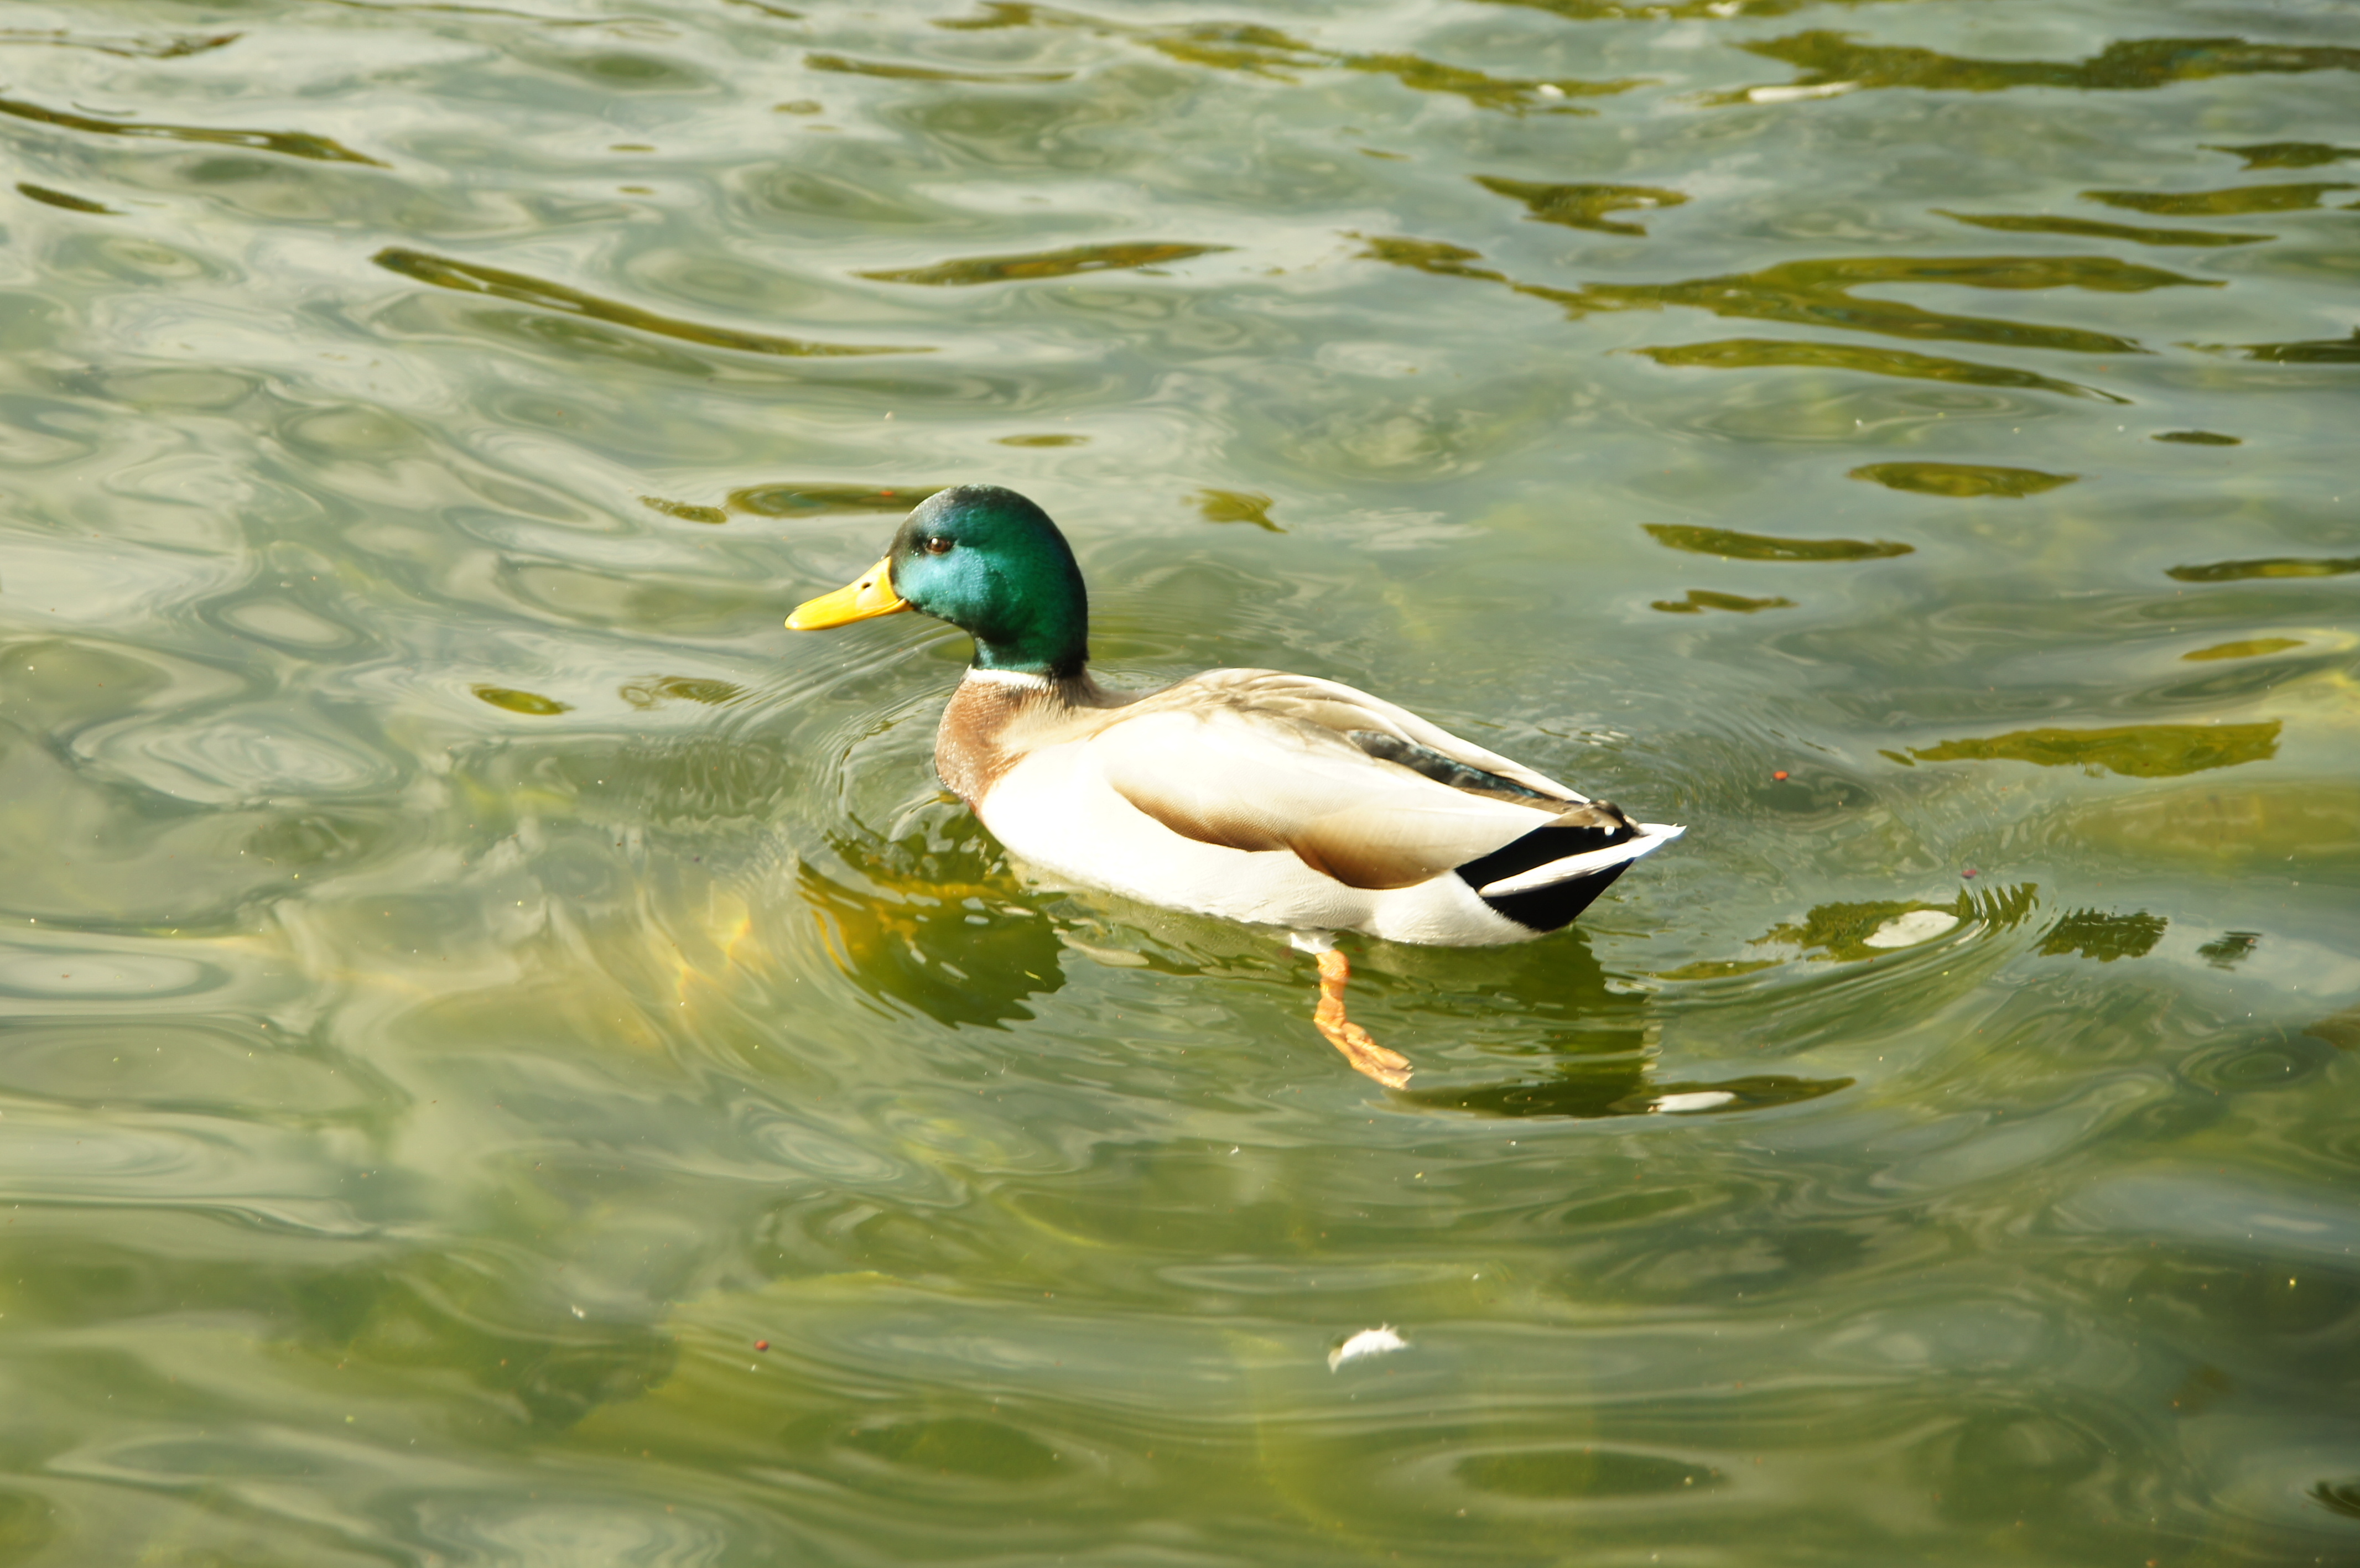 Ducks in water photo